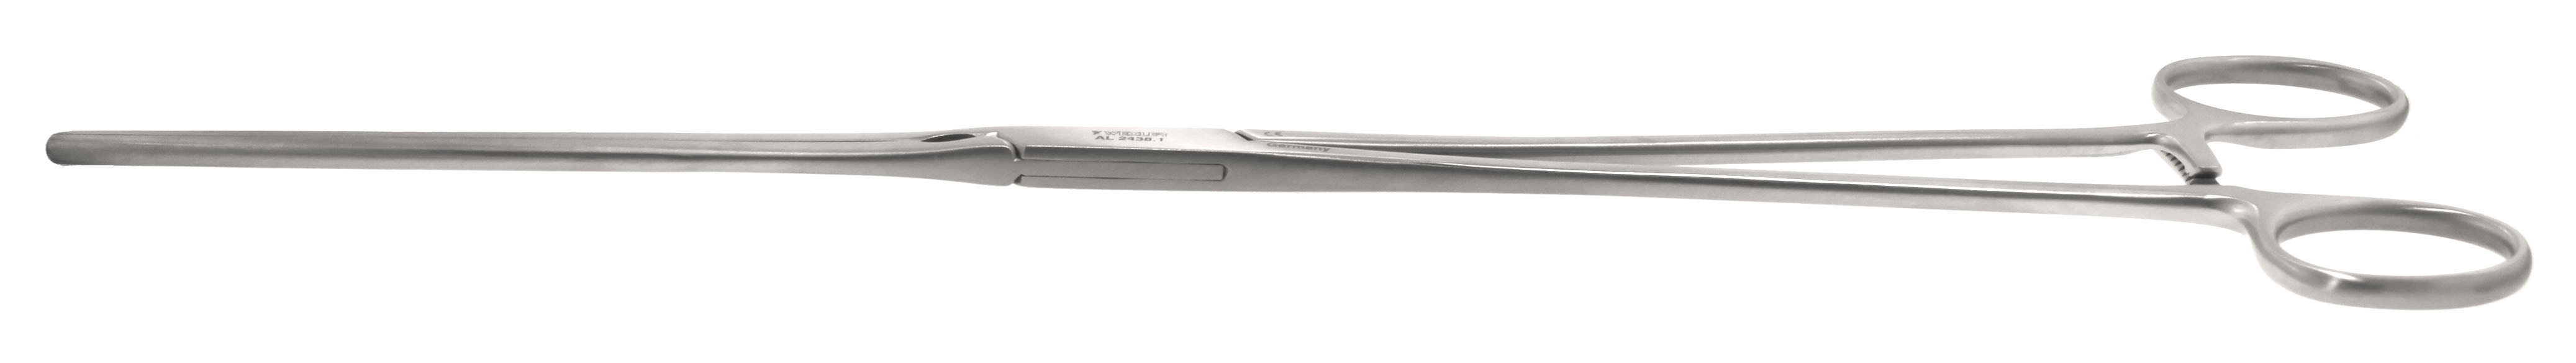 Wexler Multi-Purpose Clamp - Straight 135mm long DeBakey Atraumatic jaws